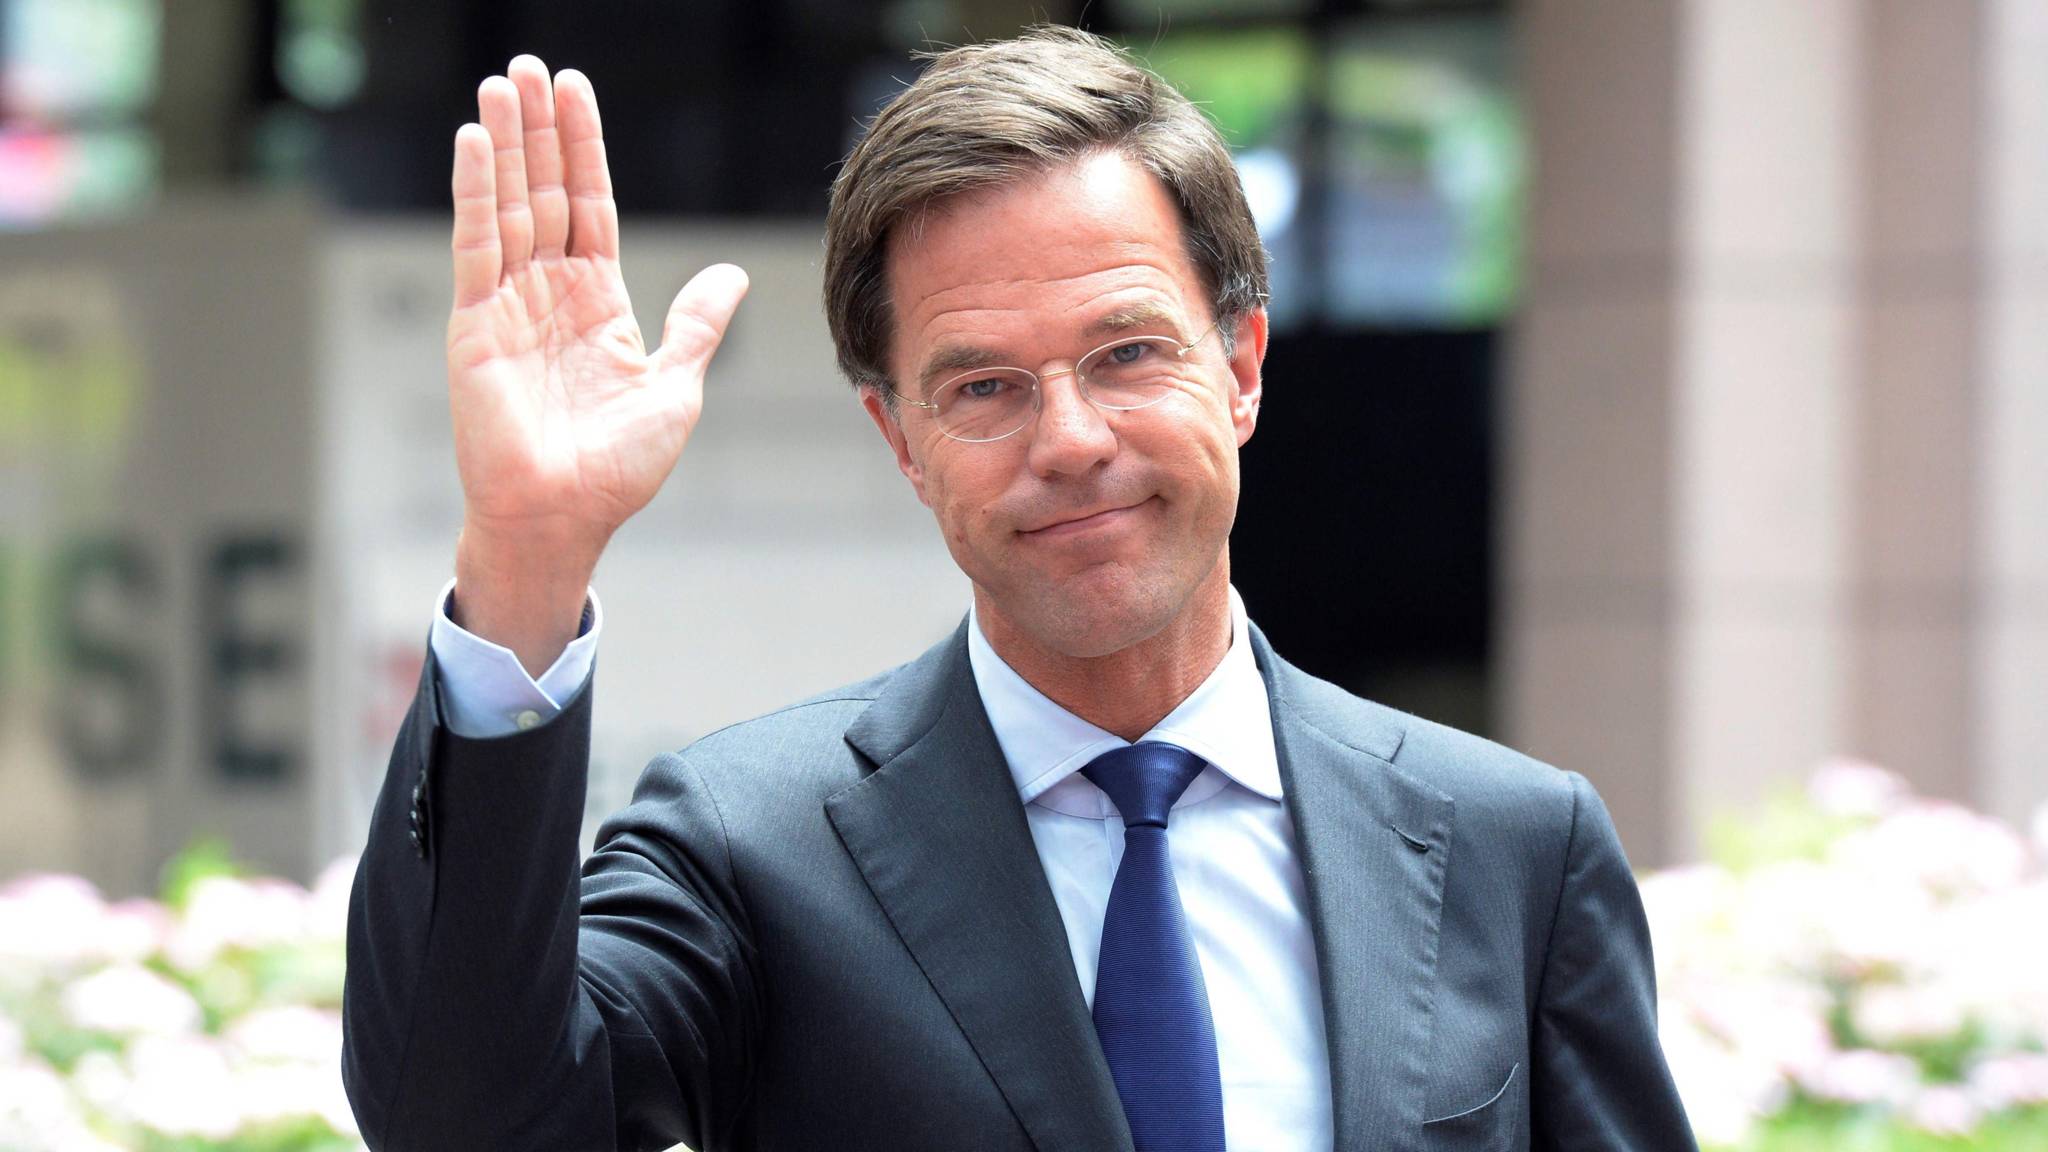 VI in maag met hogere peiling VVD: ‘Maar stemmen op Rutte kan echt niet meer’